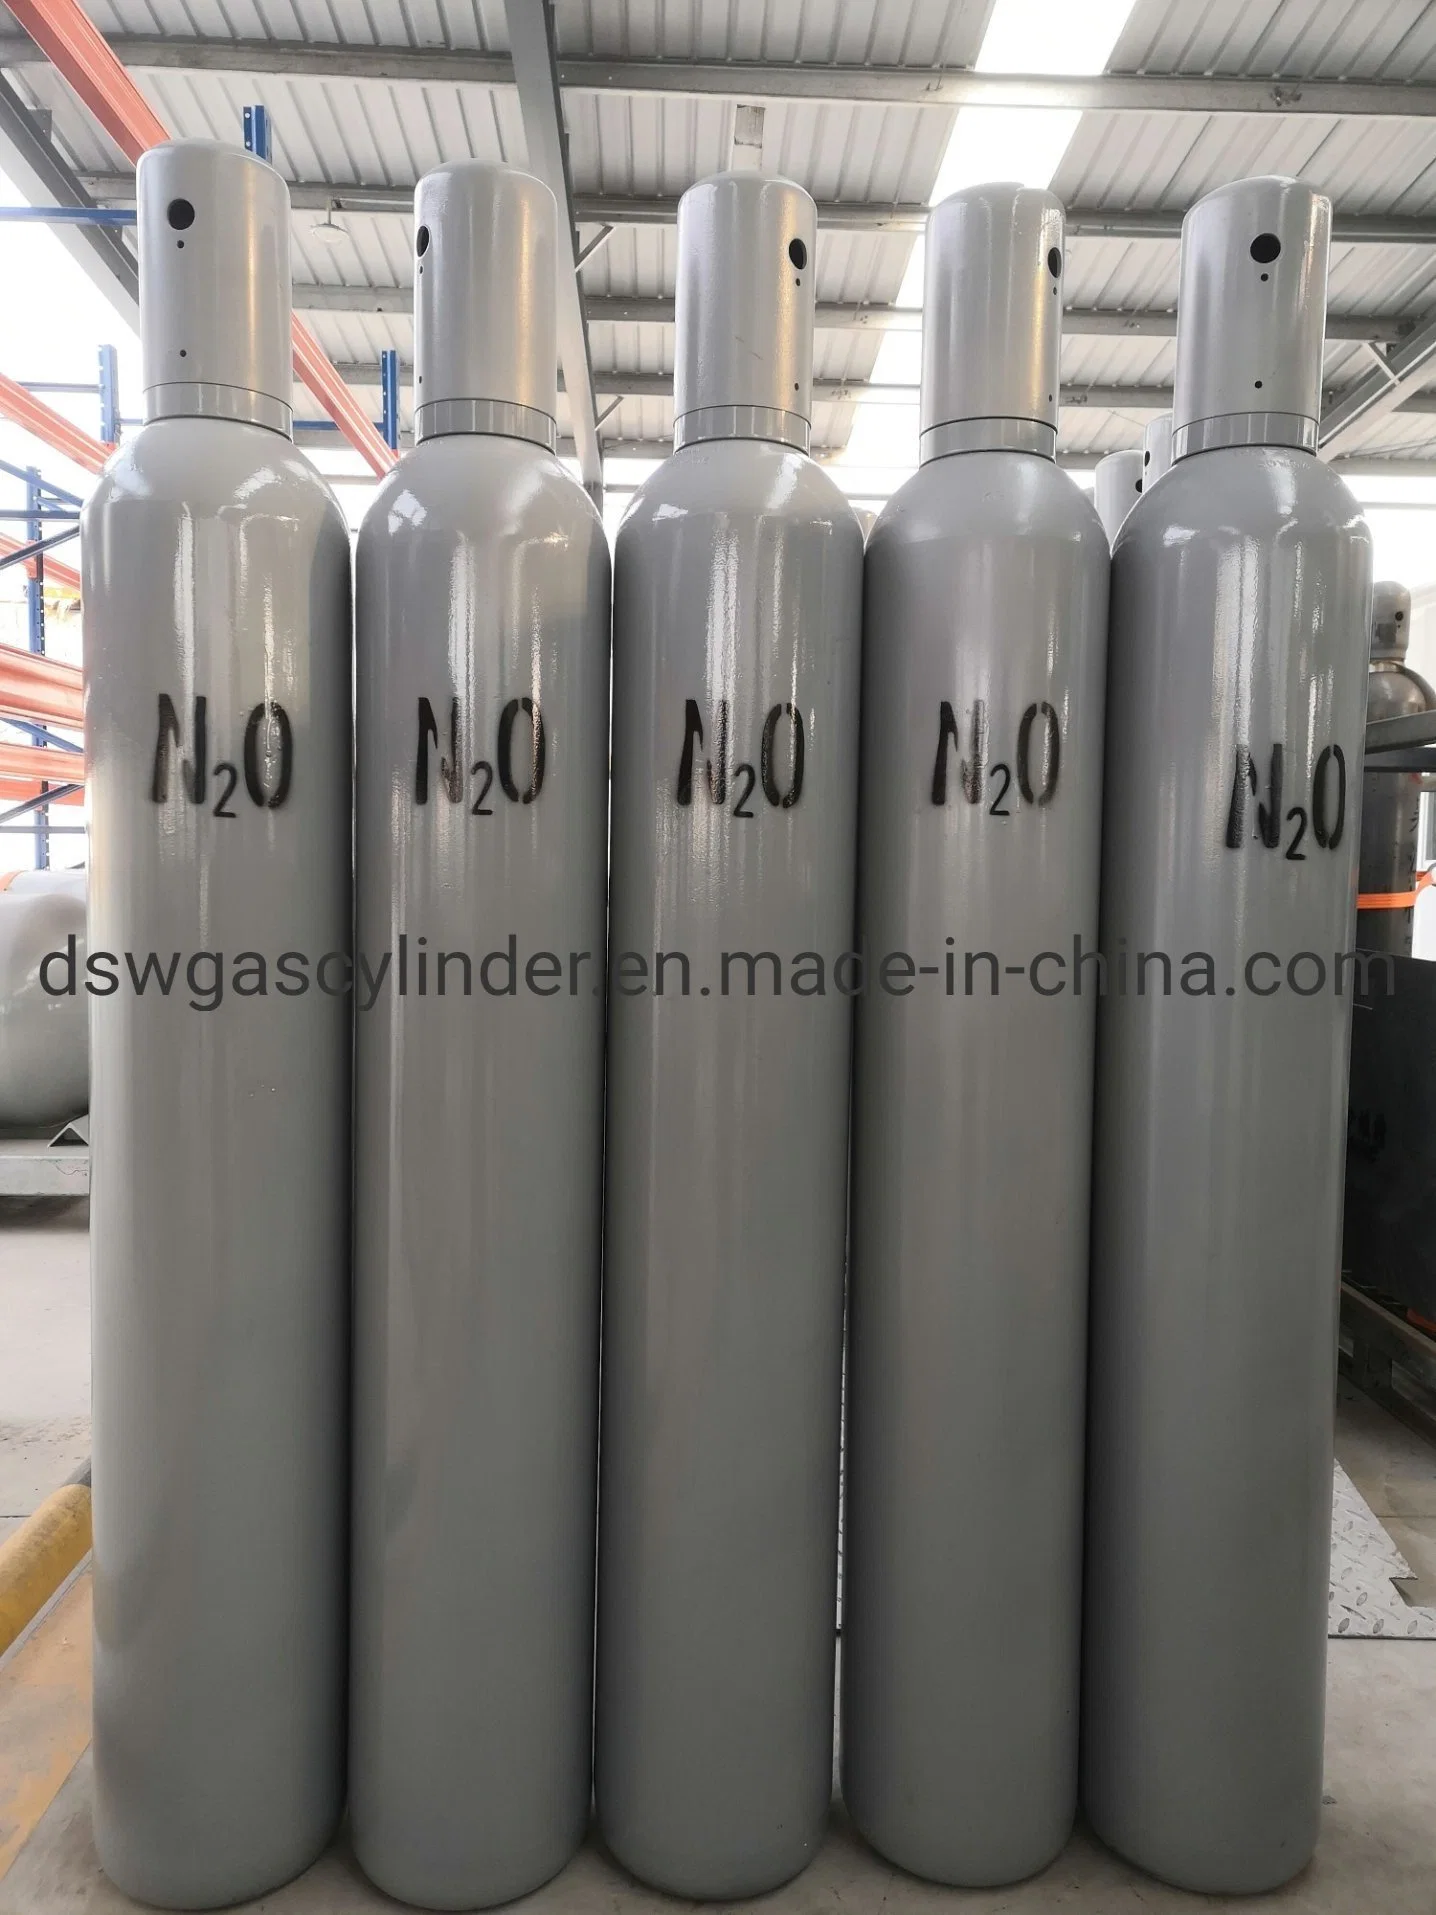 Nitrous Oxide Gas, Laughing Gas, N2o Gas